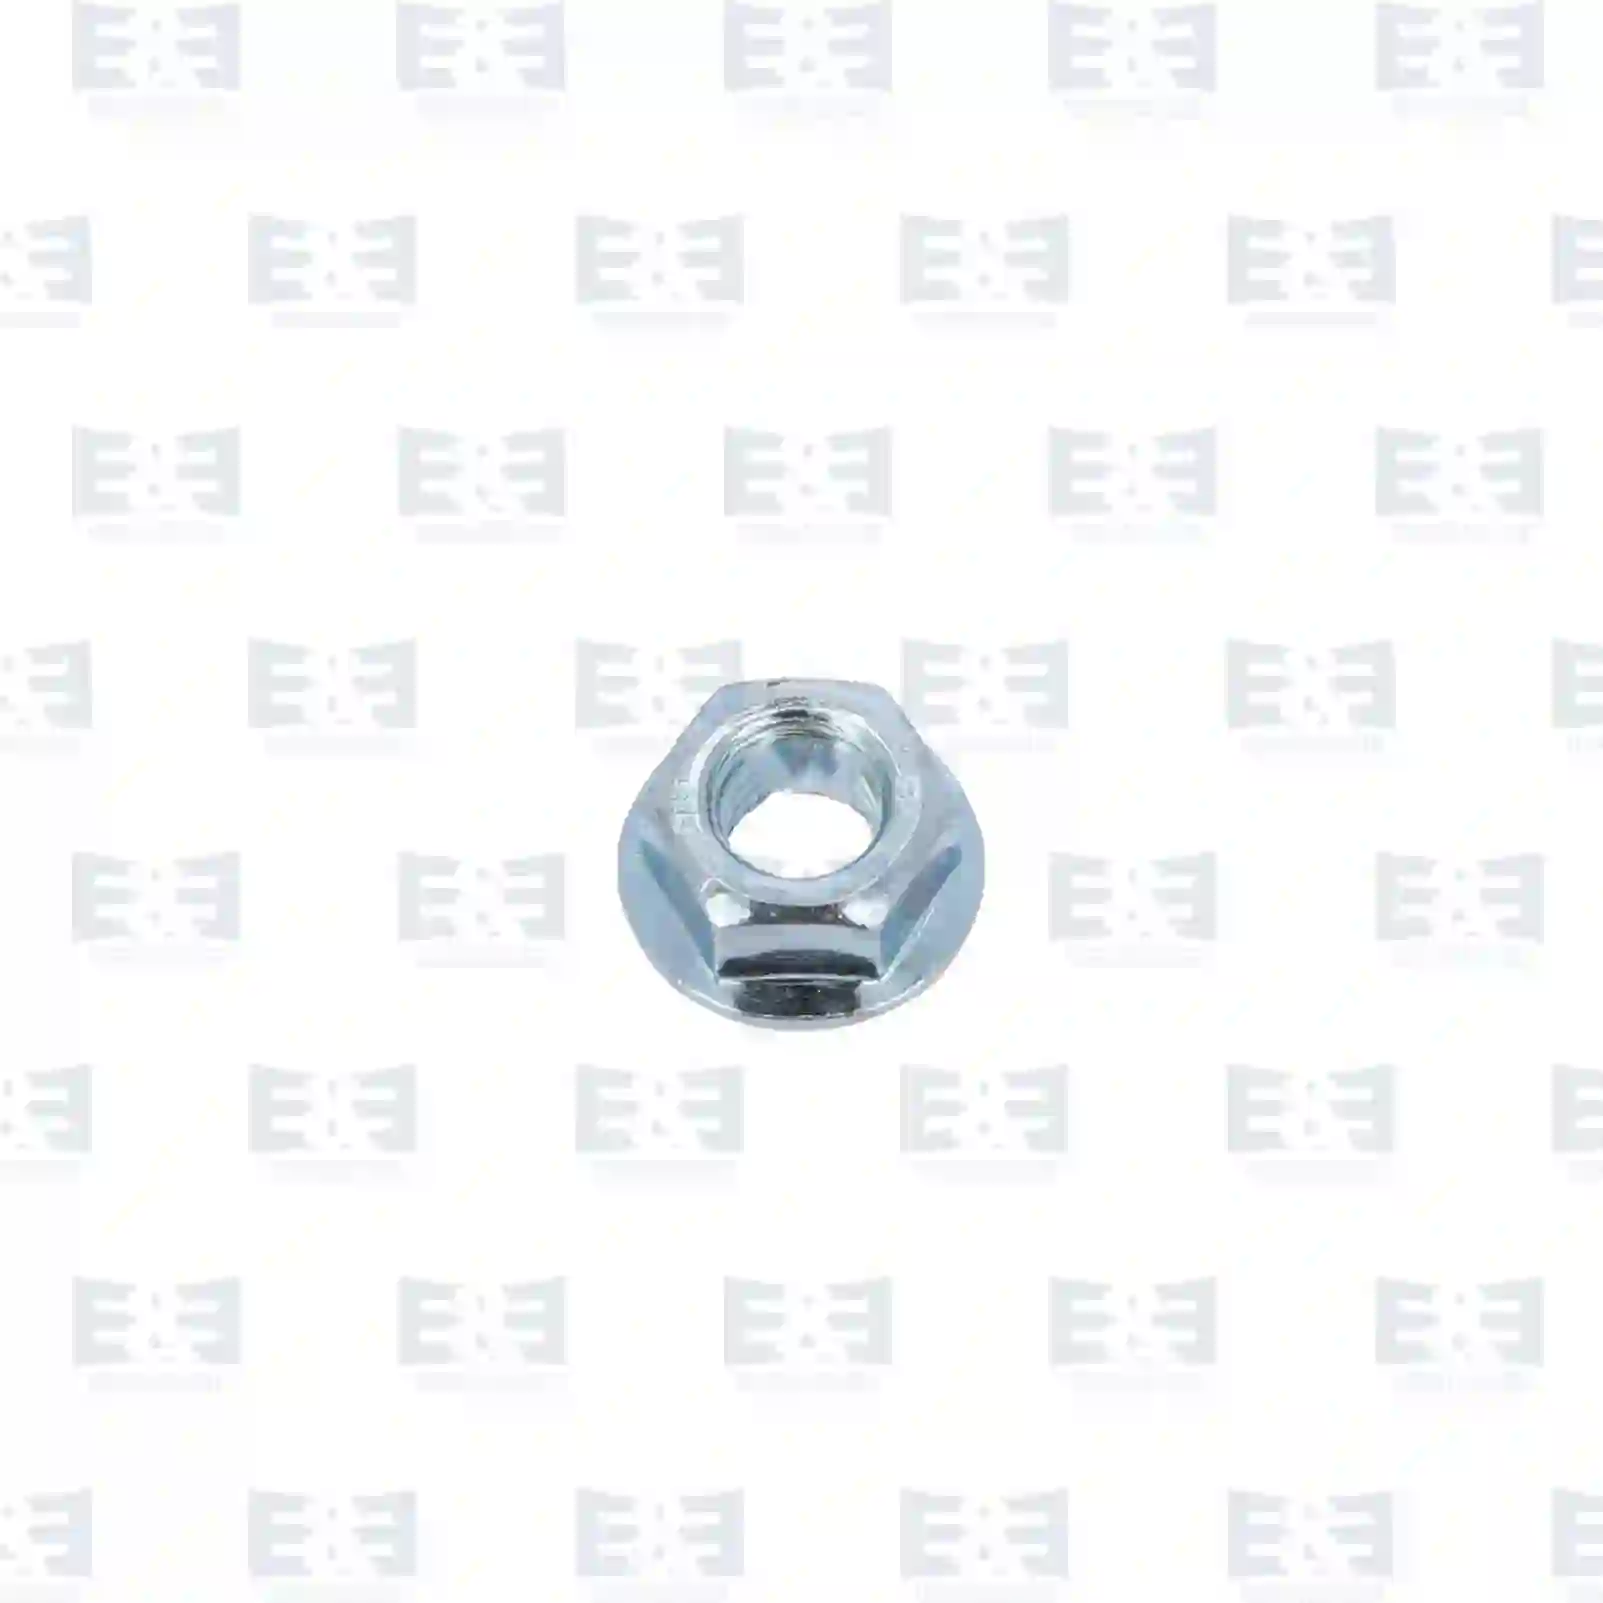  Hexagon nut || E&E Truck Spare Parts | Truck Spare Parts, Auotomotive Spare Parts